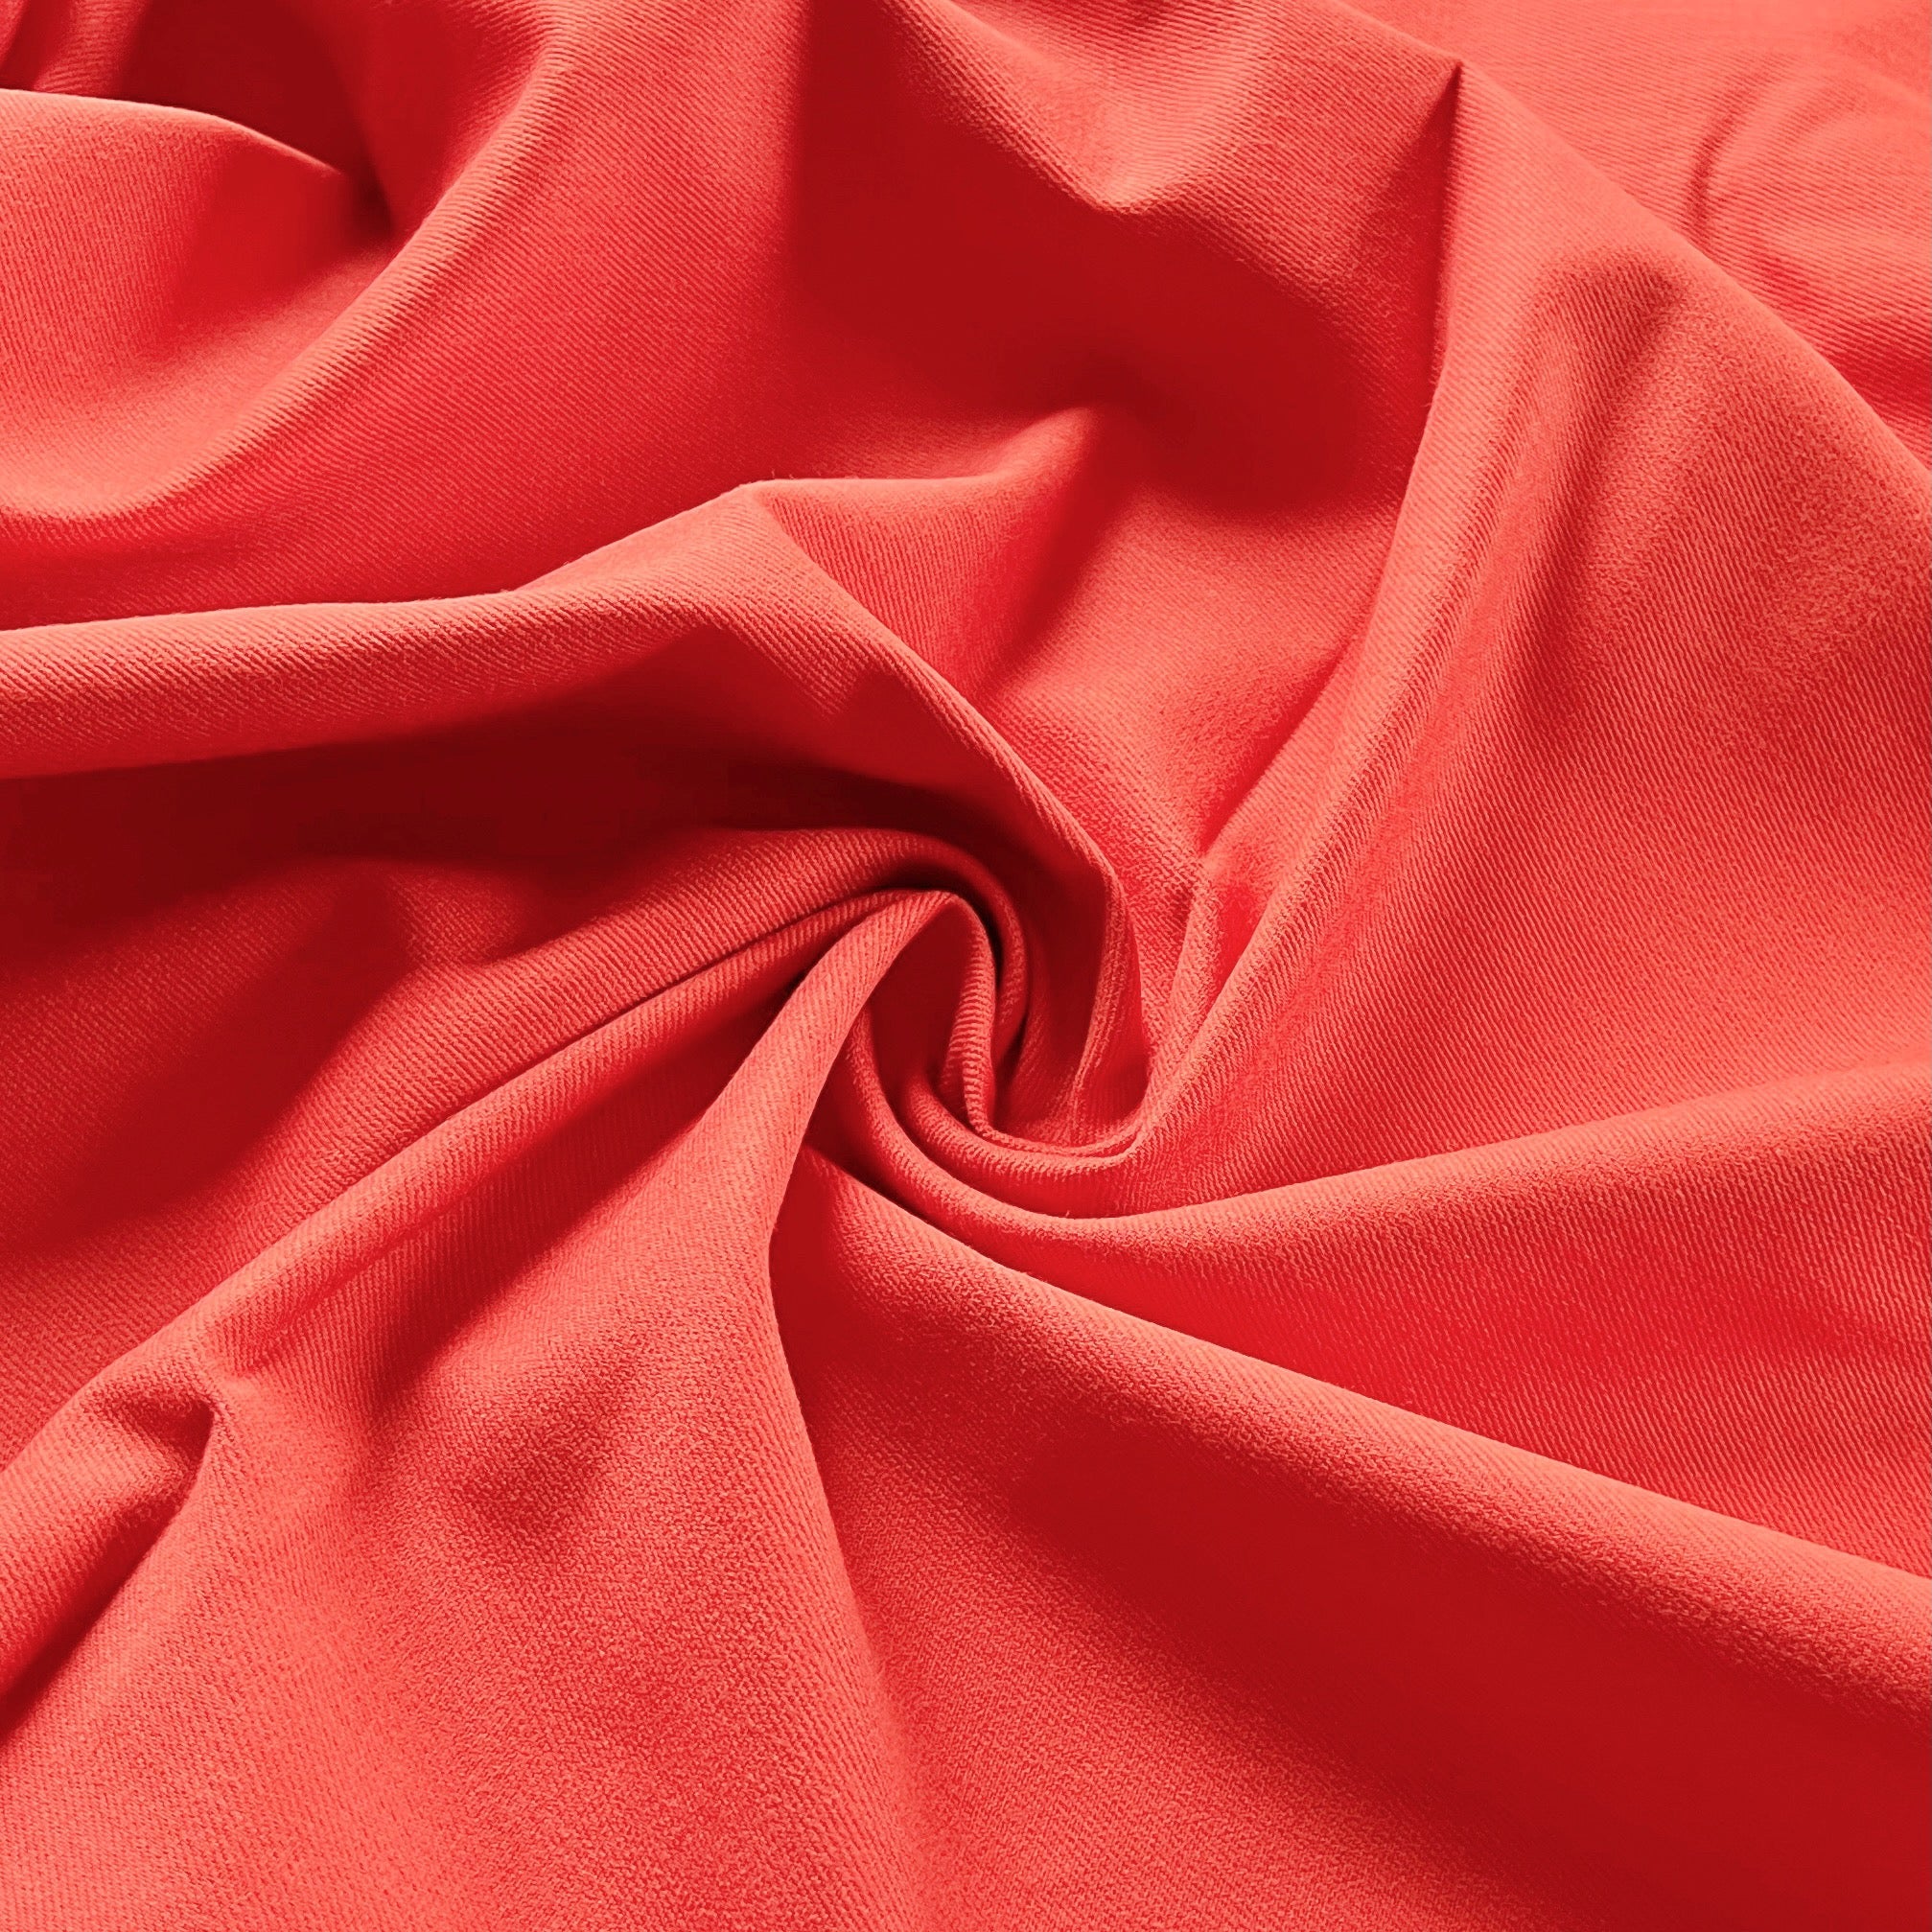 Lightweight pinstripe cotton denim sewing fabric.. — michellepatterns.com